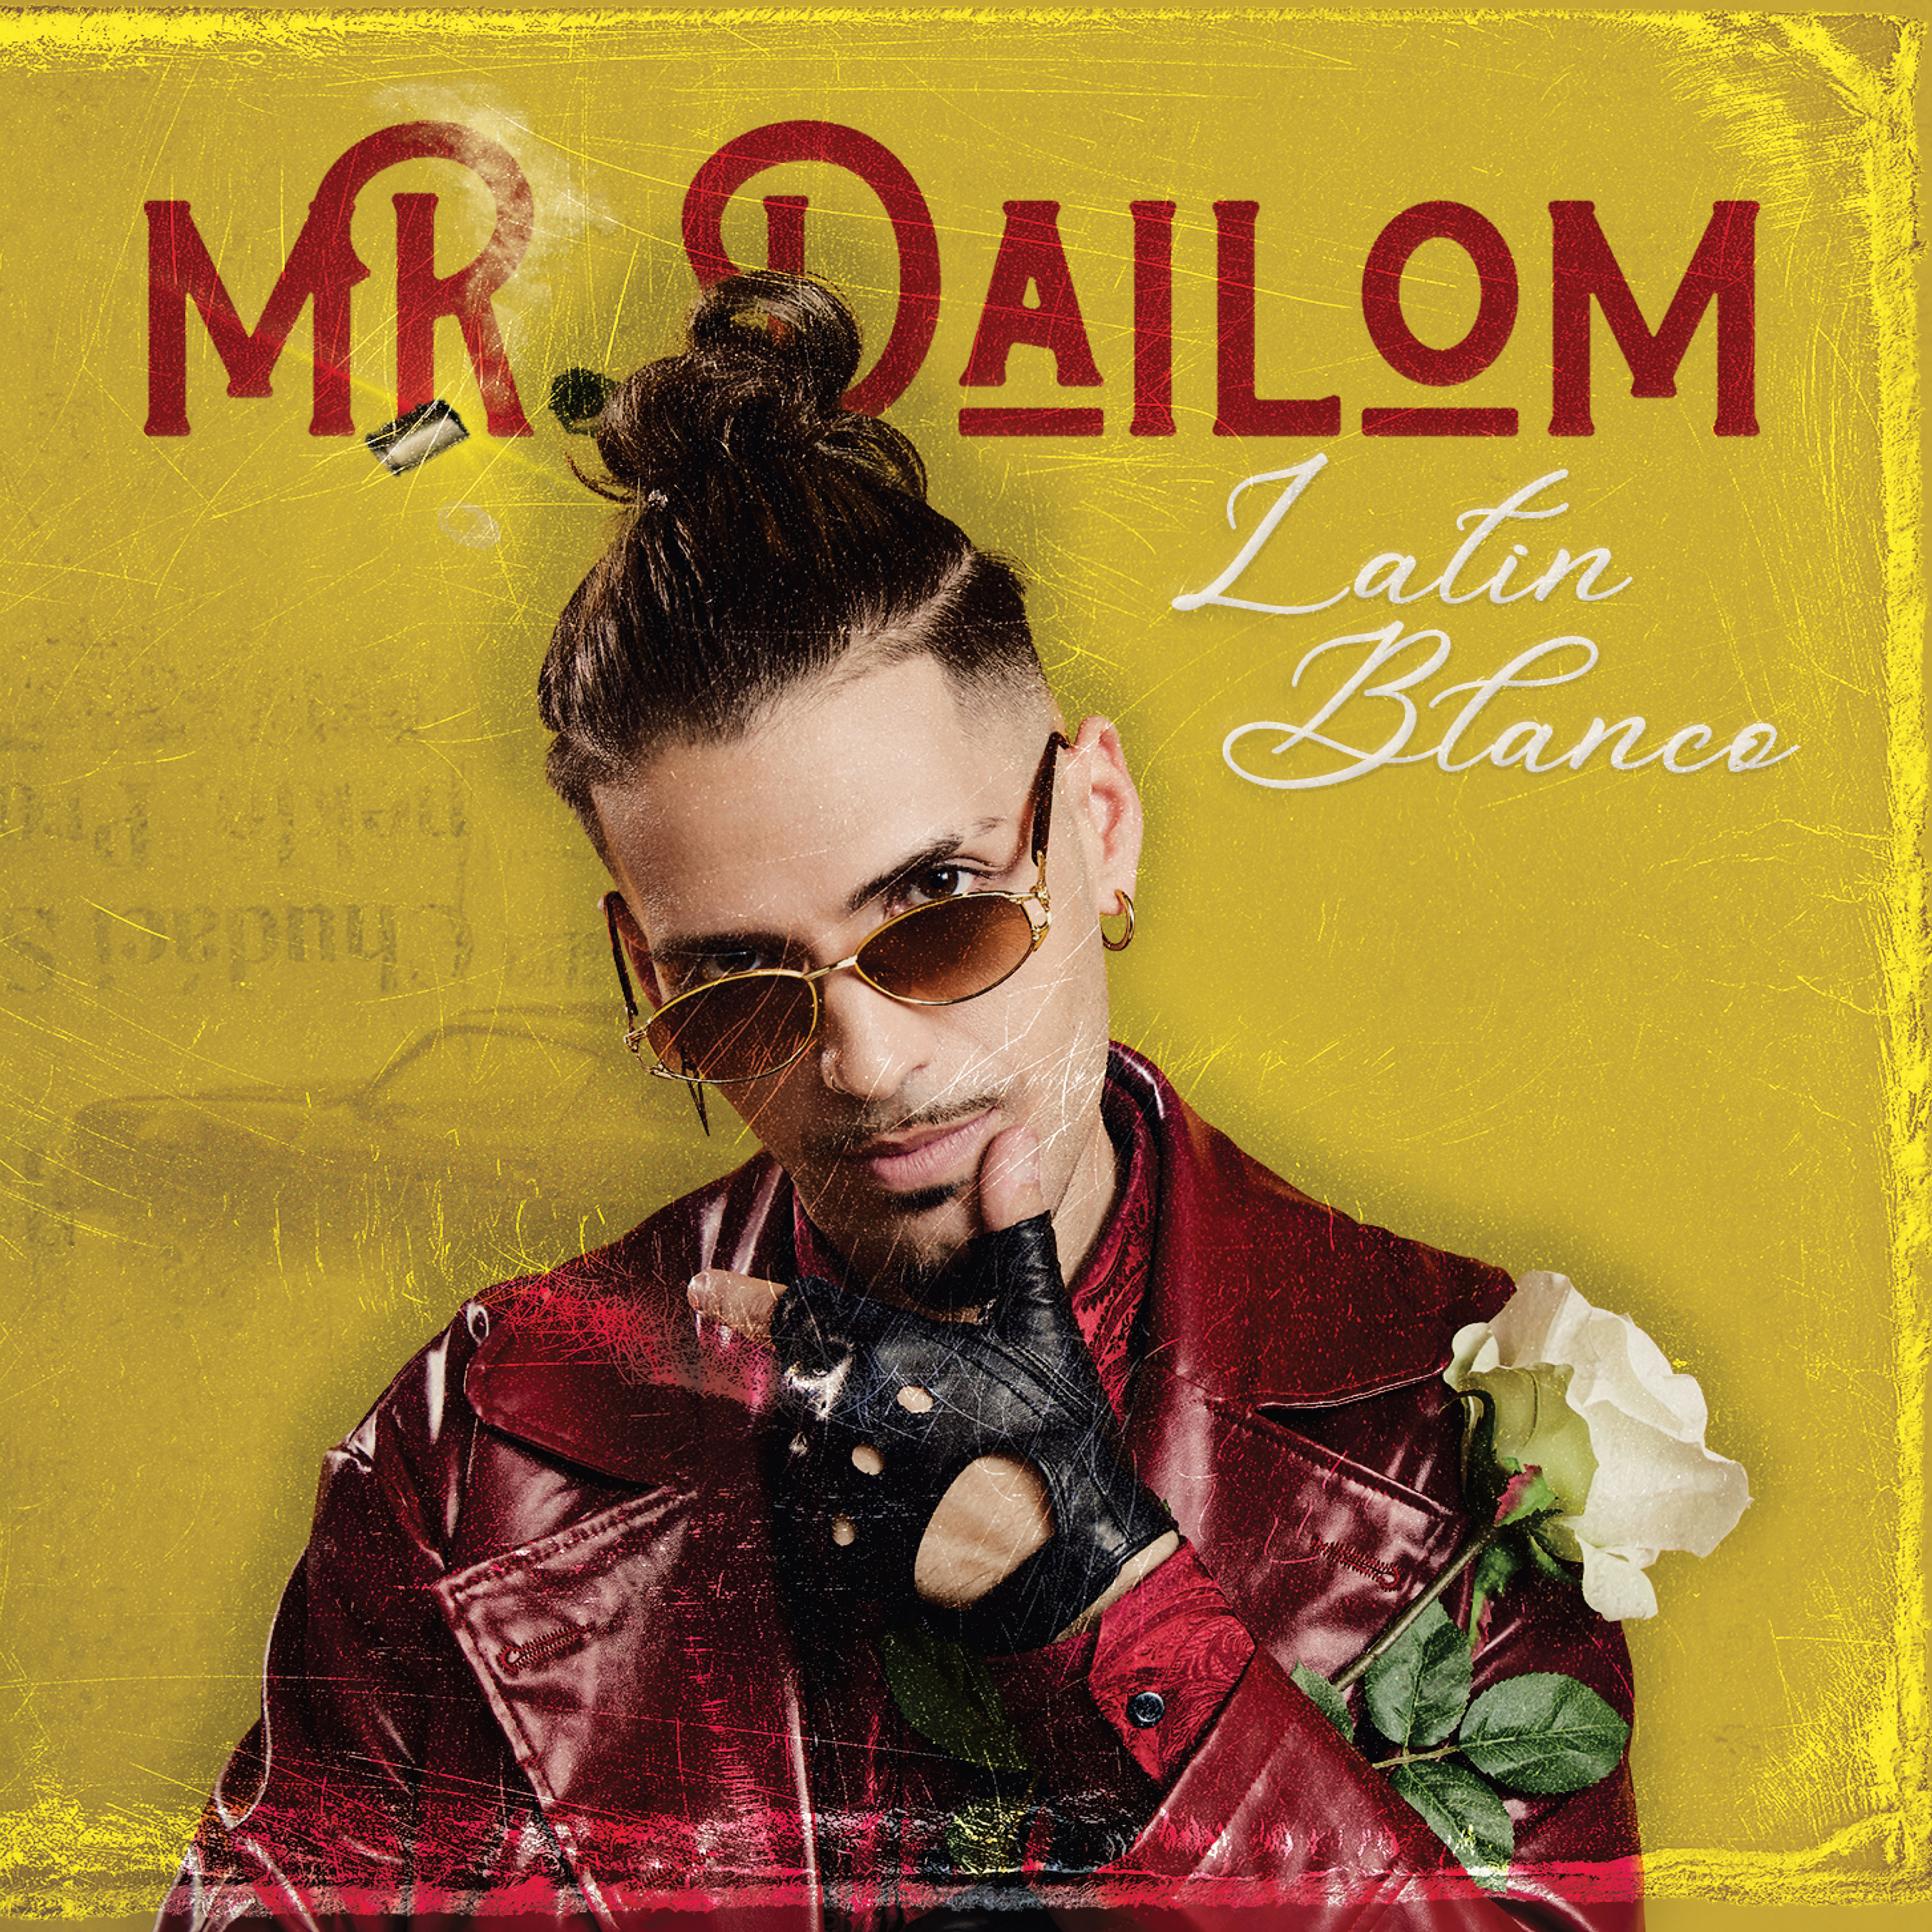 Copertina album Latin Blanco di Mr. Dailom